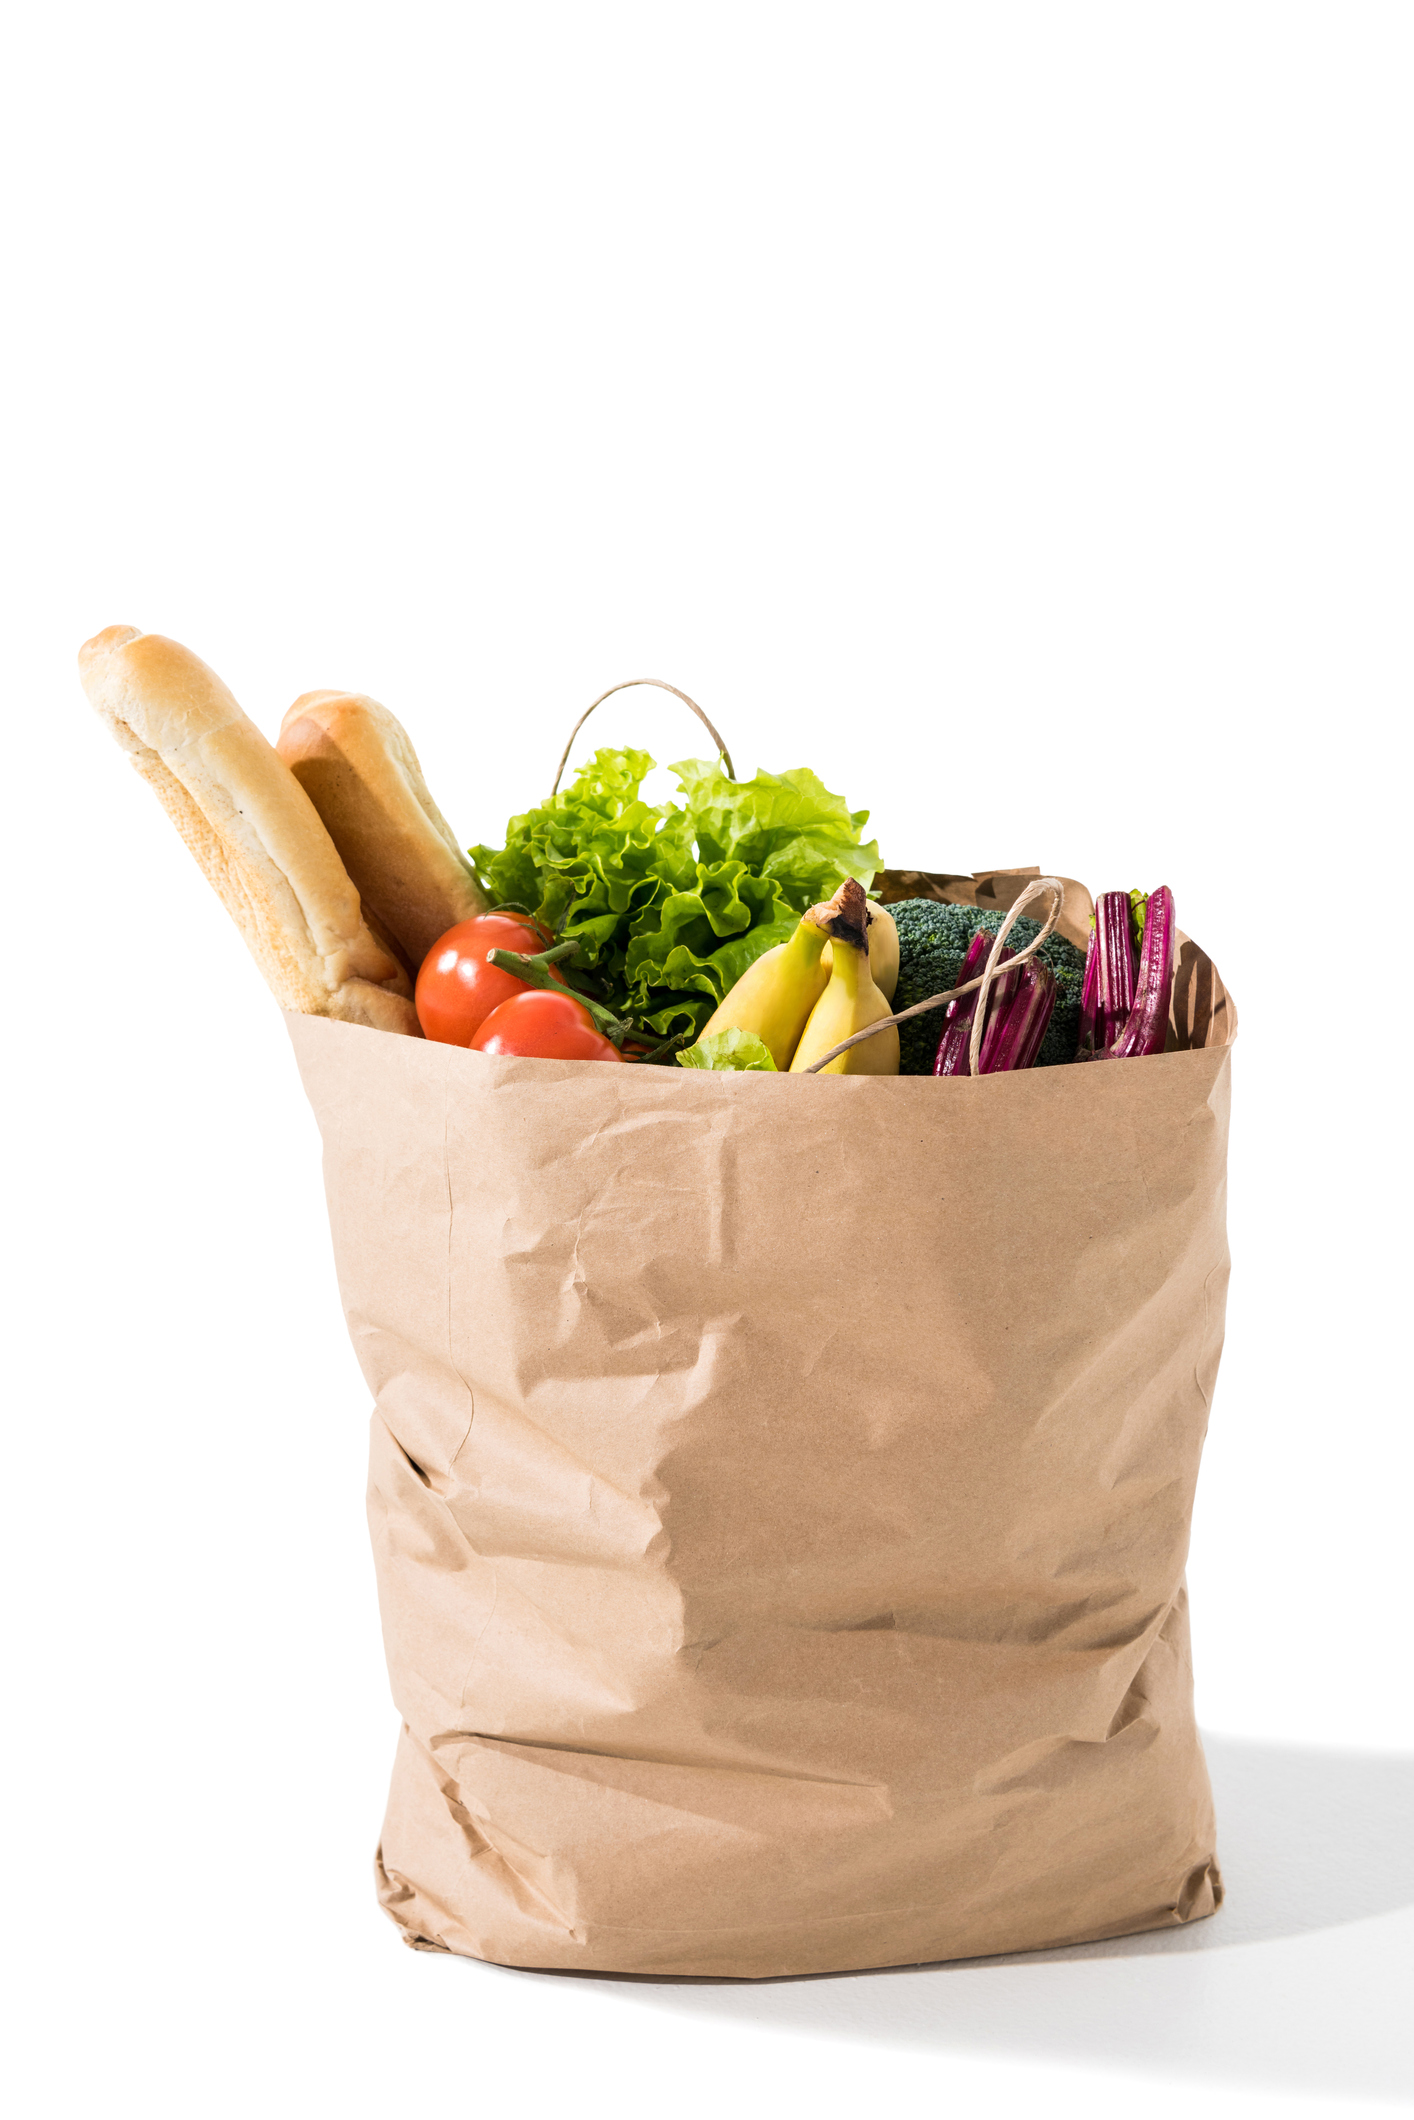 sack of groceries